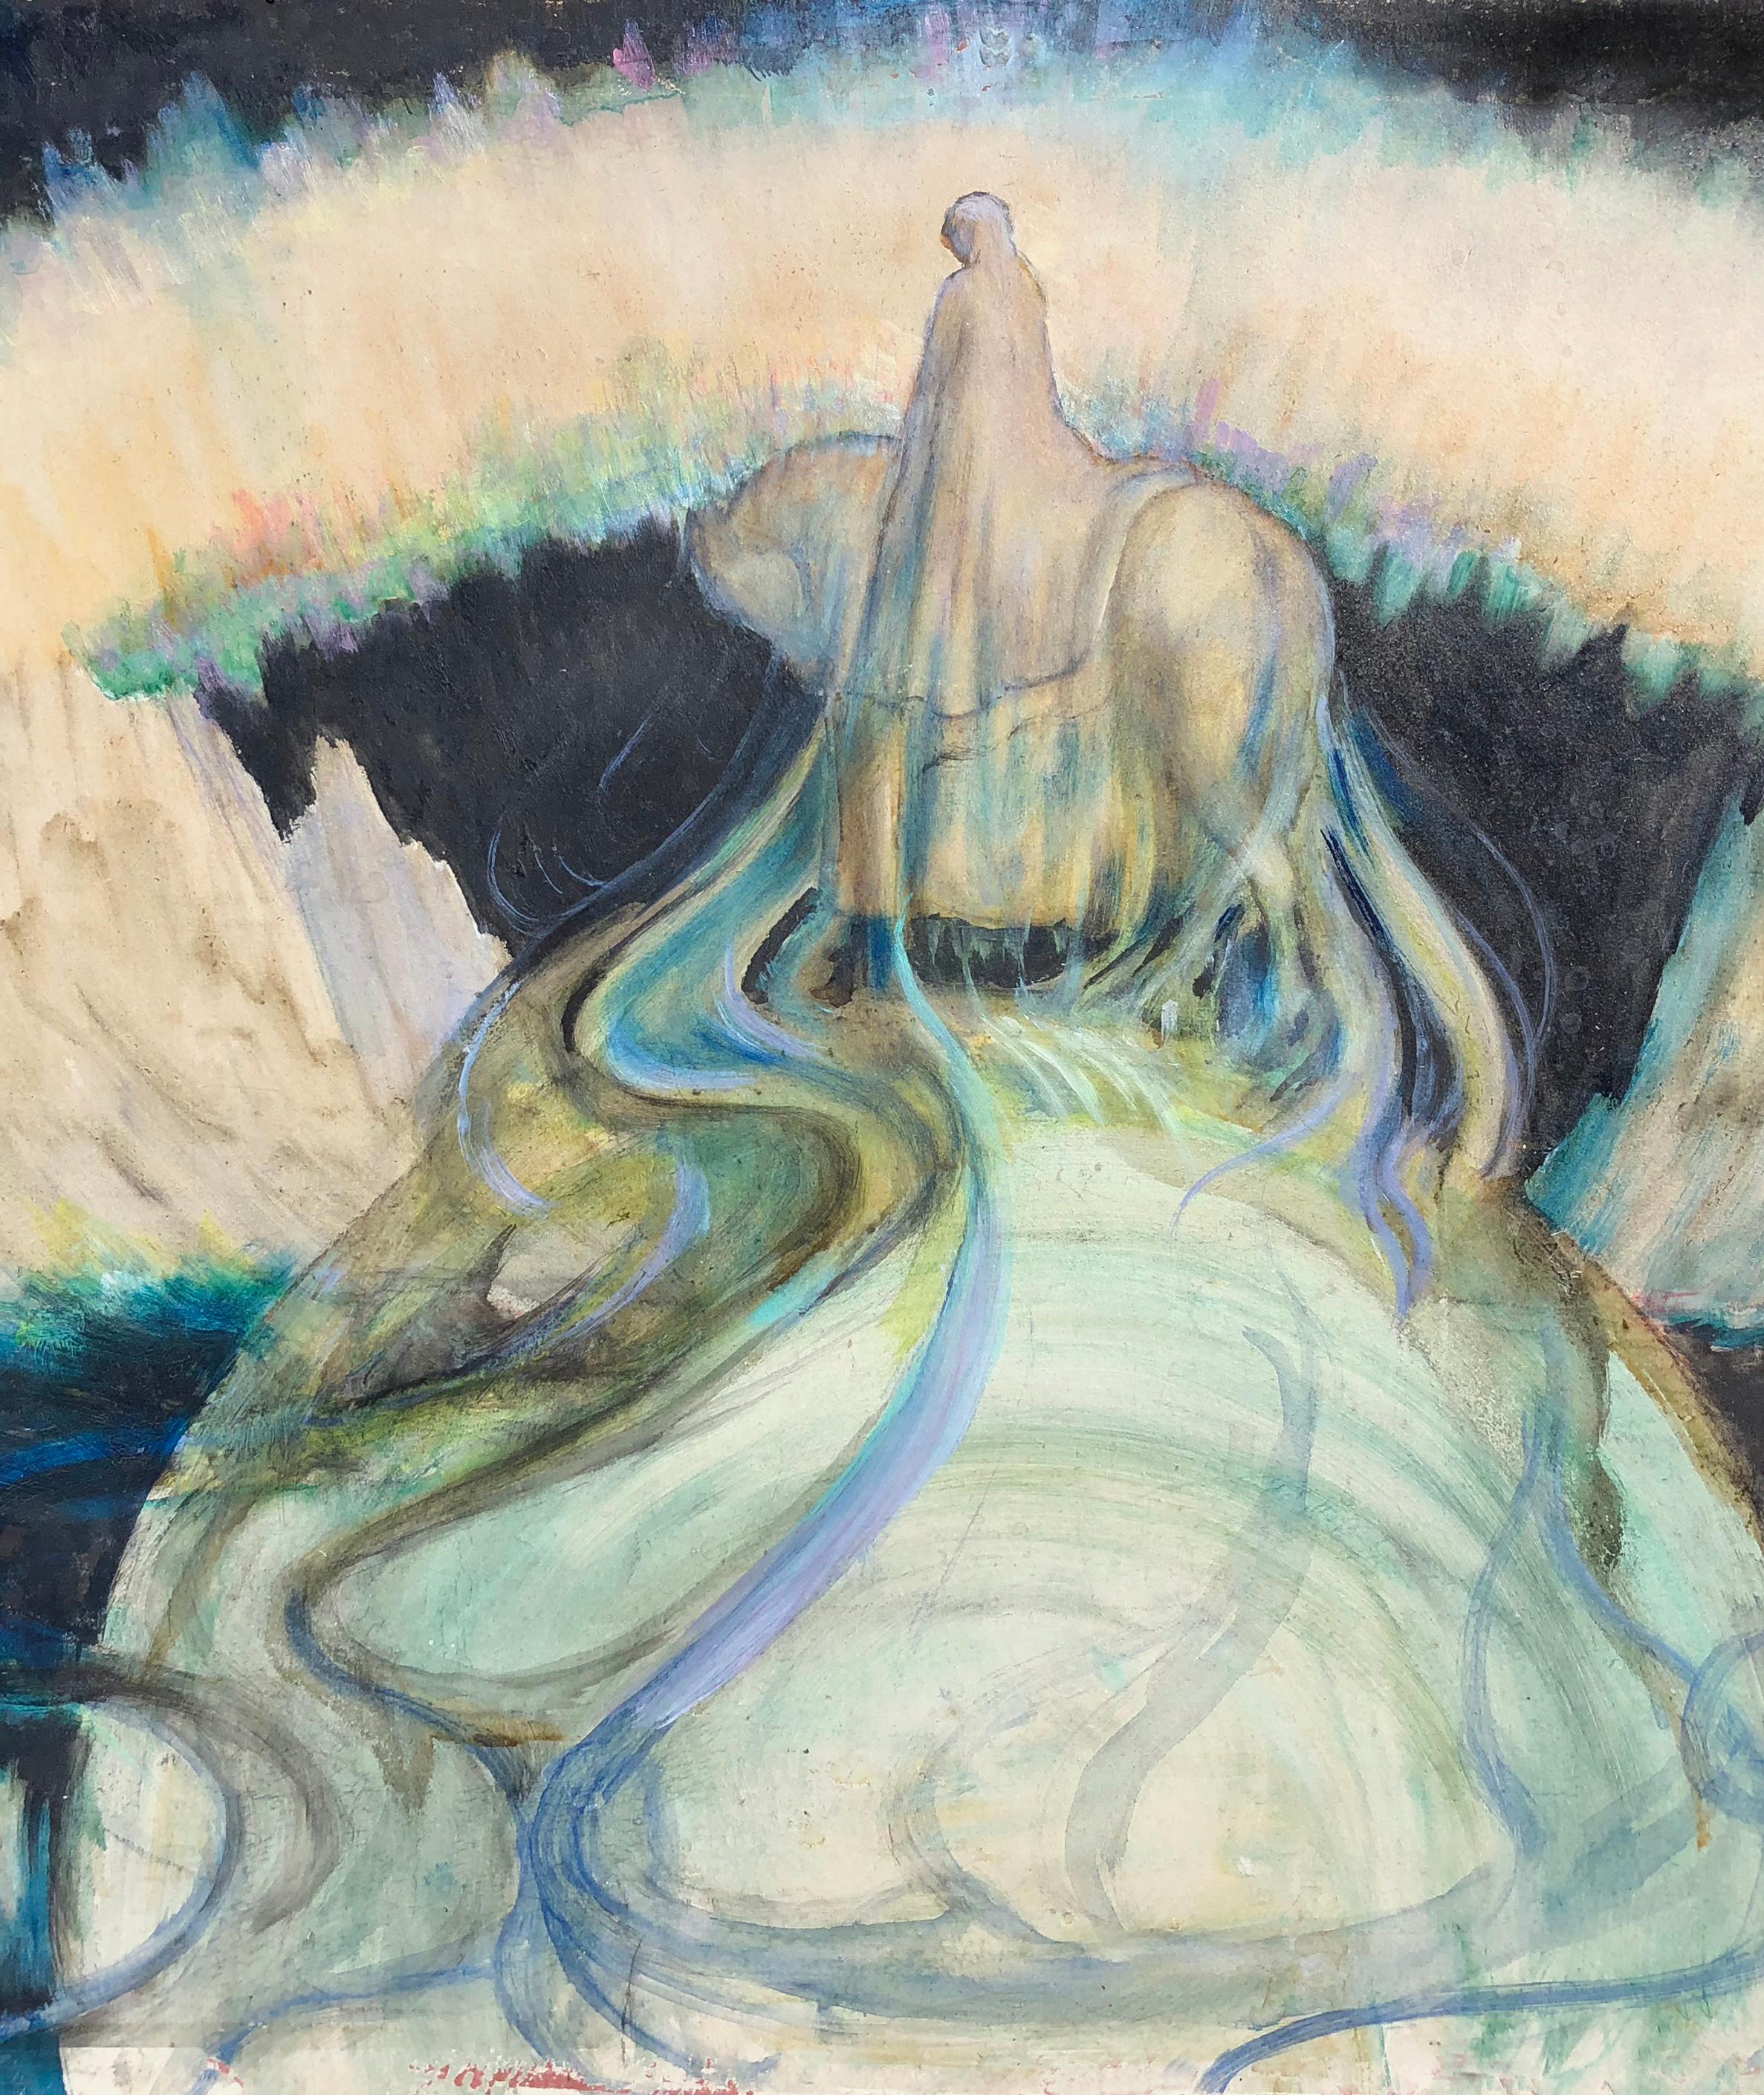 Über der Flussleiste „Ameles Potamos“ und die Höhle hypnos Langdale (Symbolismus), Painting, von Marmaduke Albert Langdale